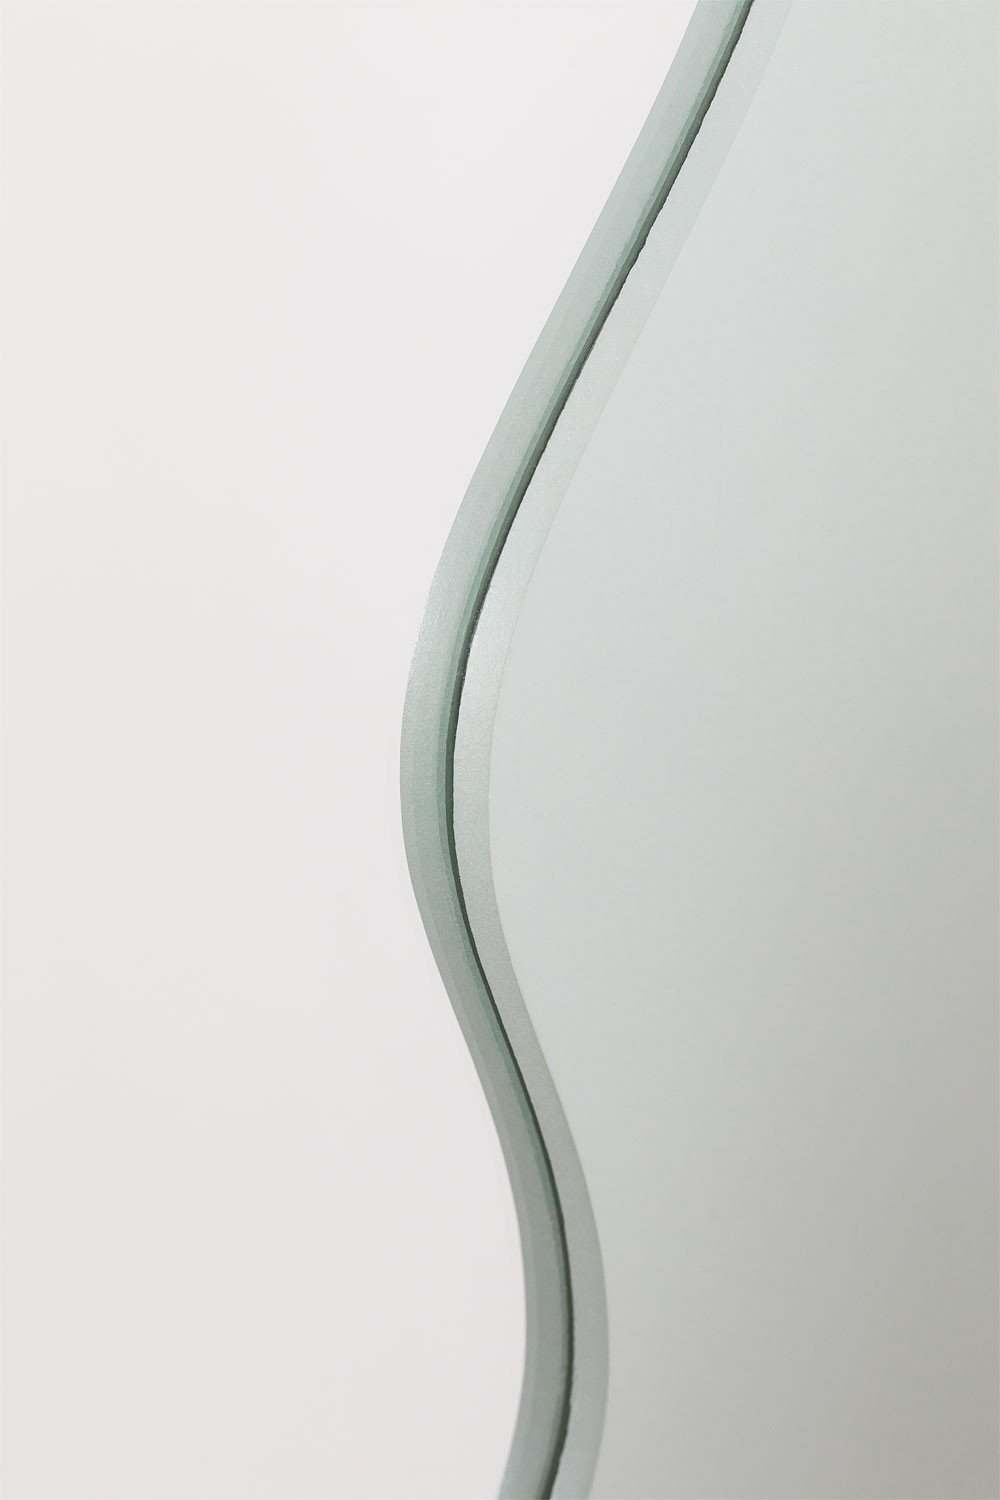 Espejo de Pared Rectangular con Balda en MDF (50x80 cm) Nurah - SKLUM